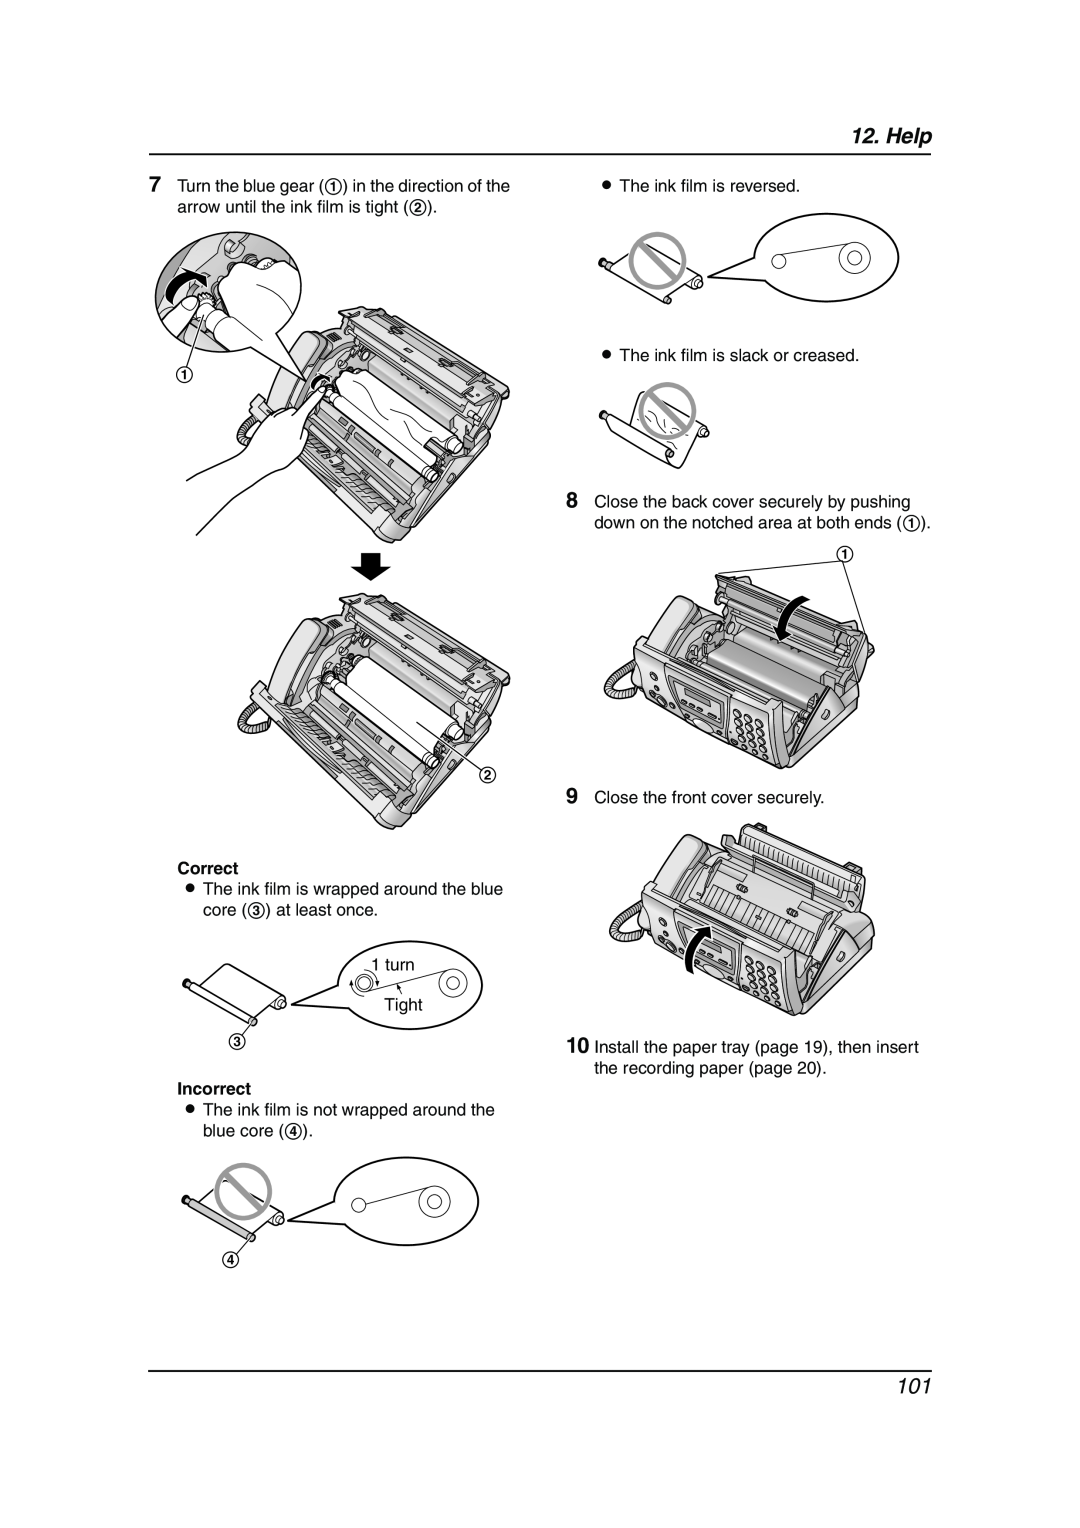 Panasonic KX-FC241AL manual Help, Correct, Incorrect 